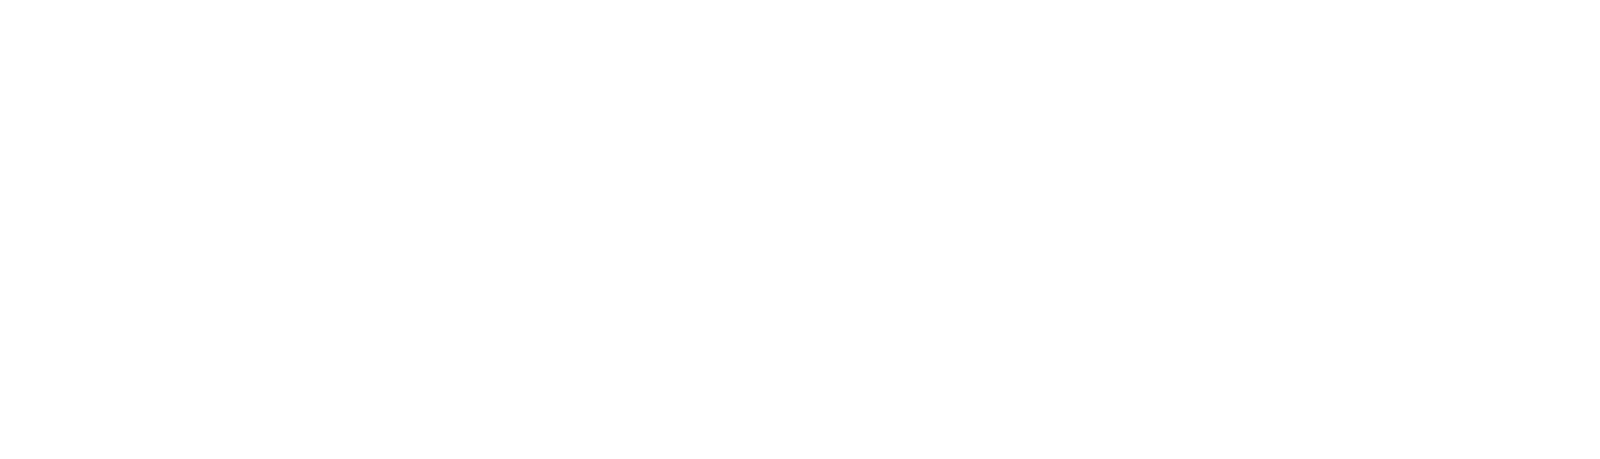 Meadowstone Place 55+ active adult retirement communities dallas tx logo